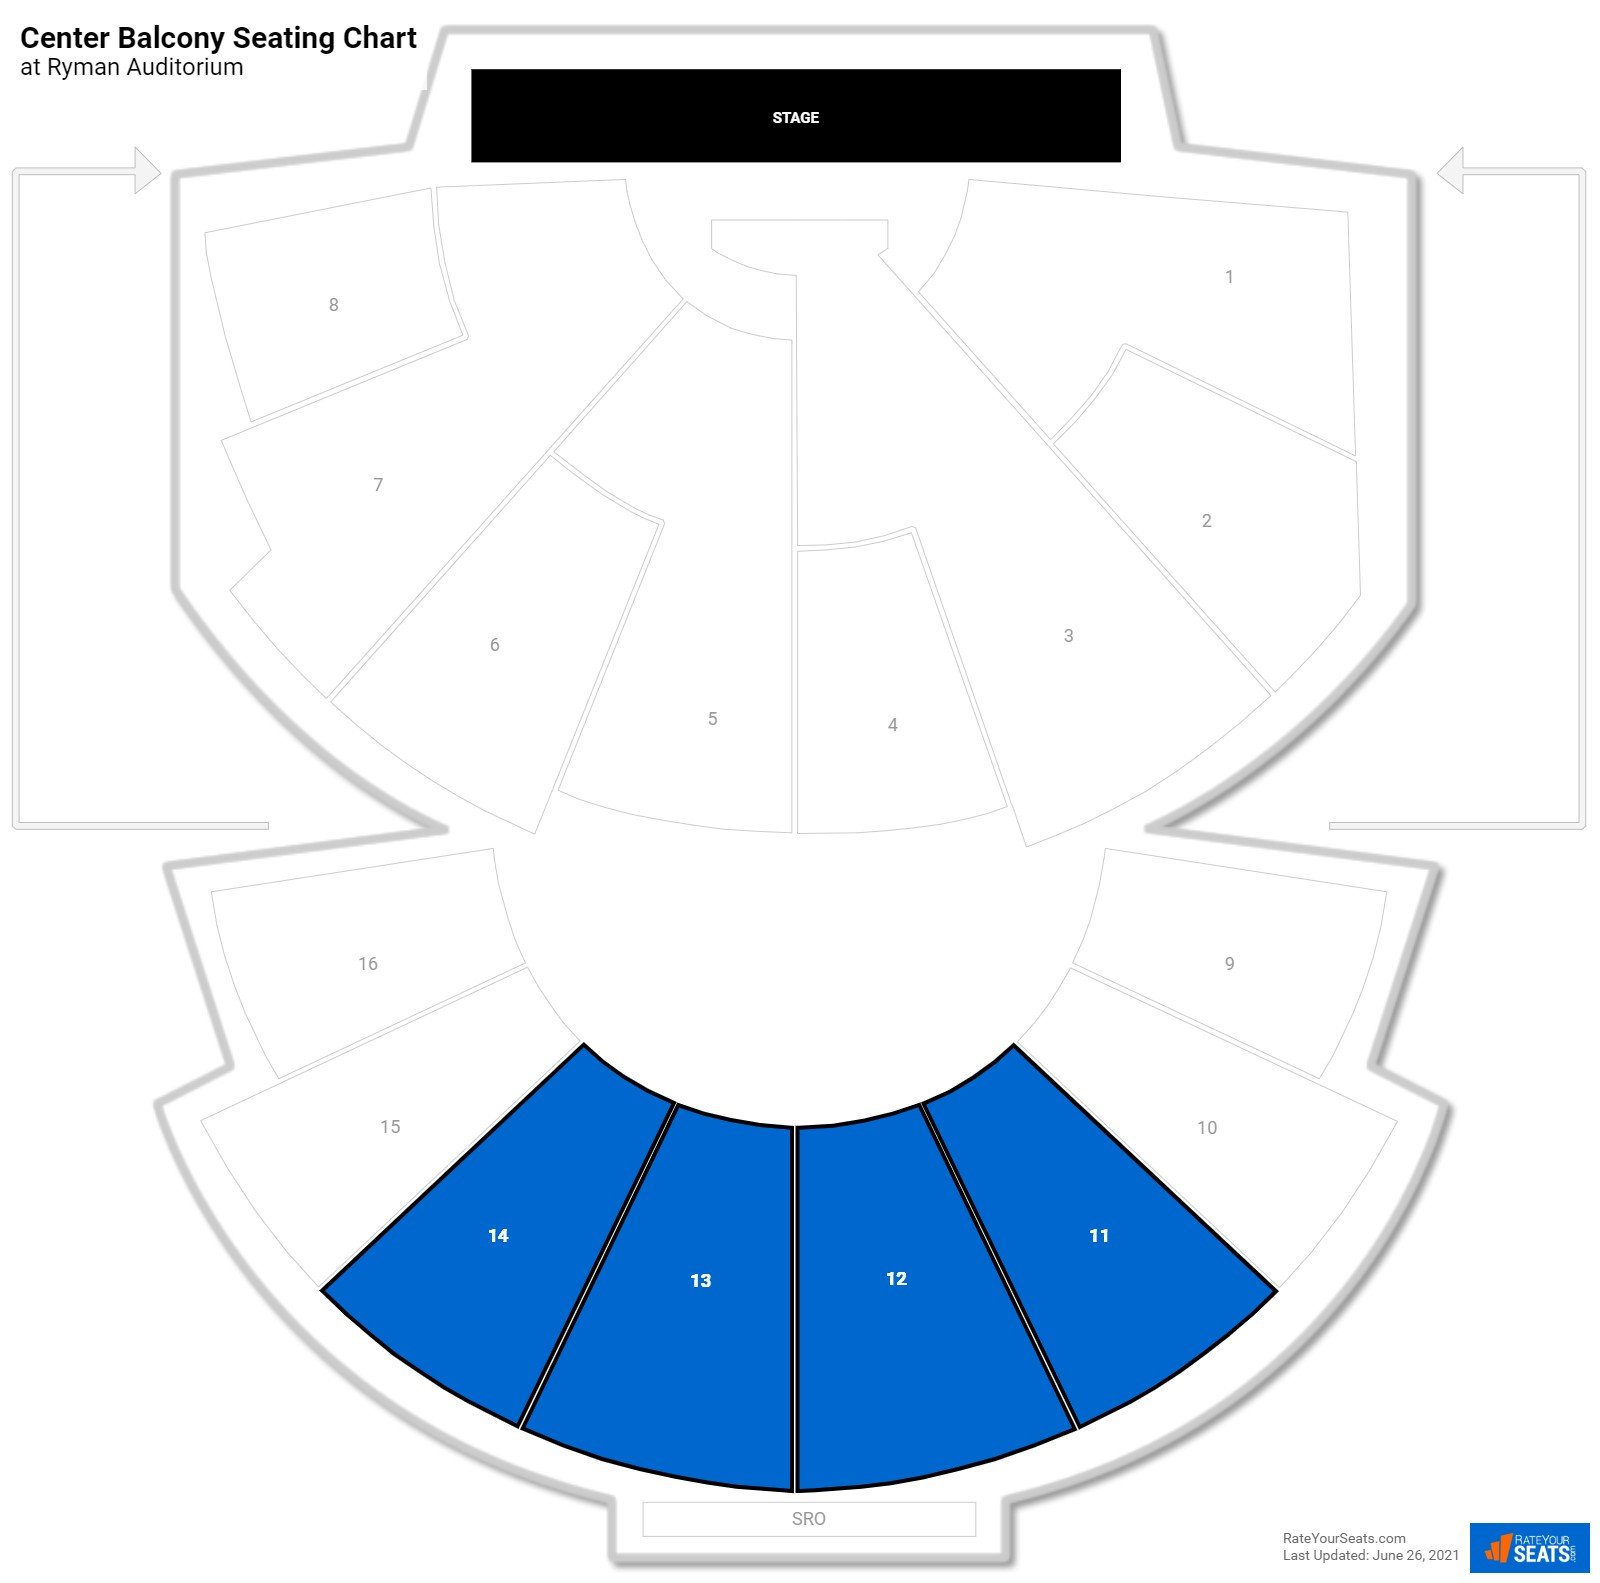 Concert Center Balcony Seating Chart at Ryman Auditorium